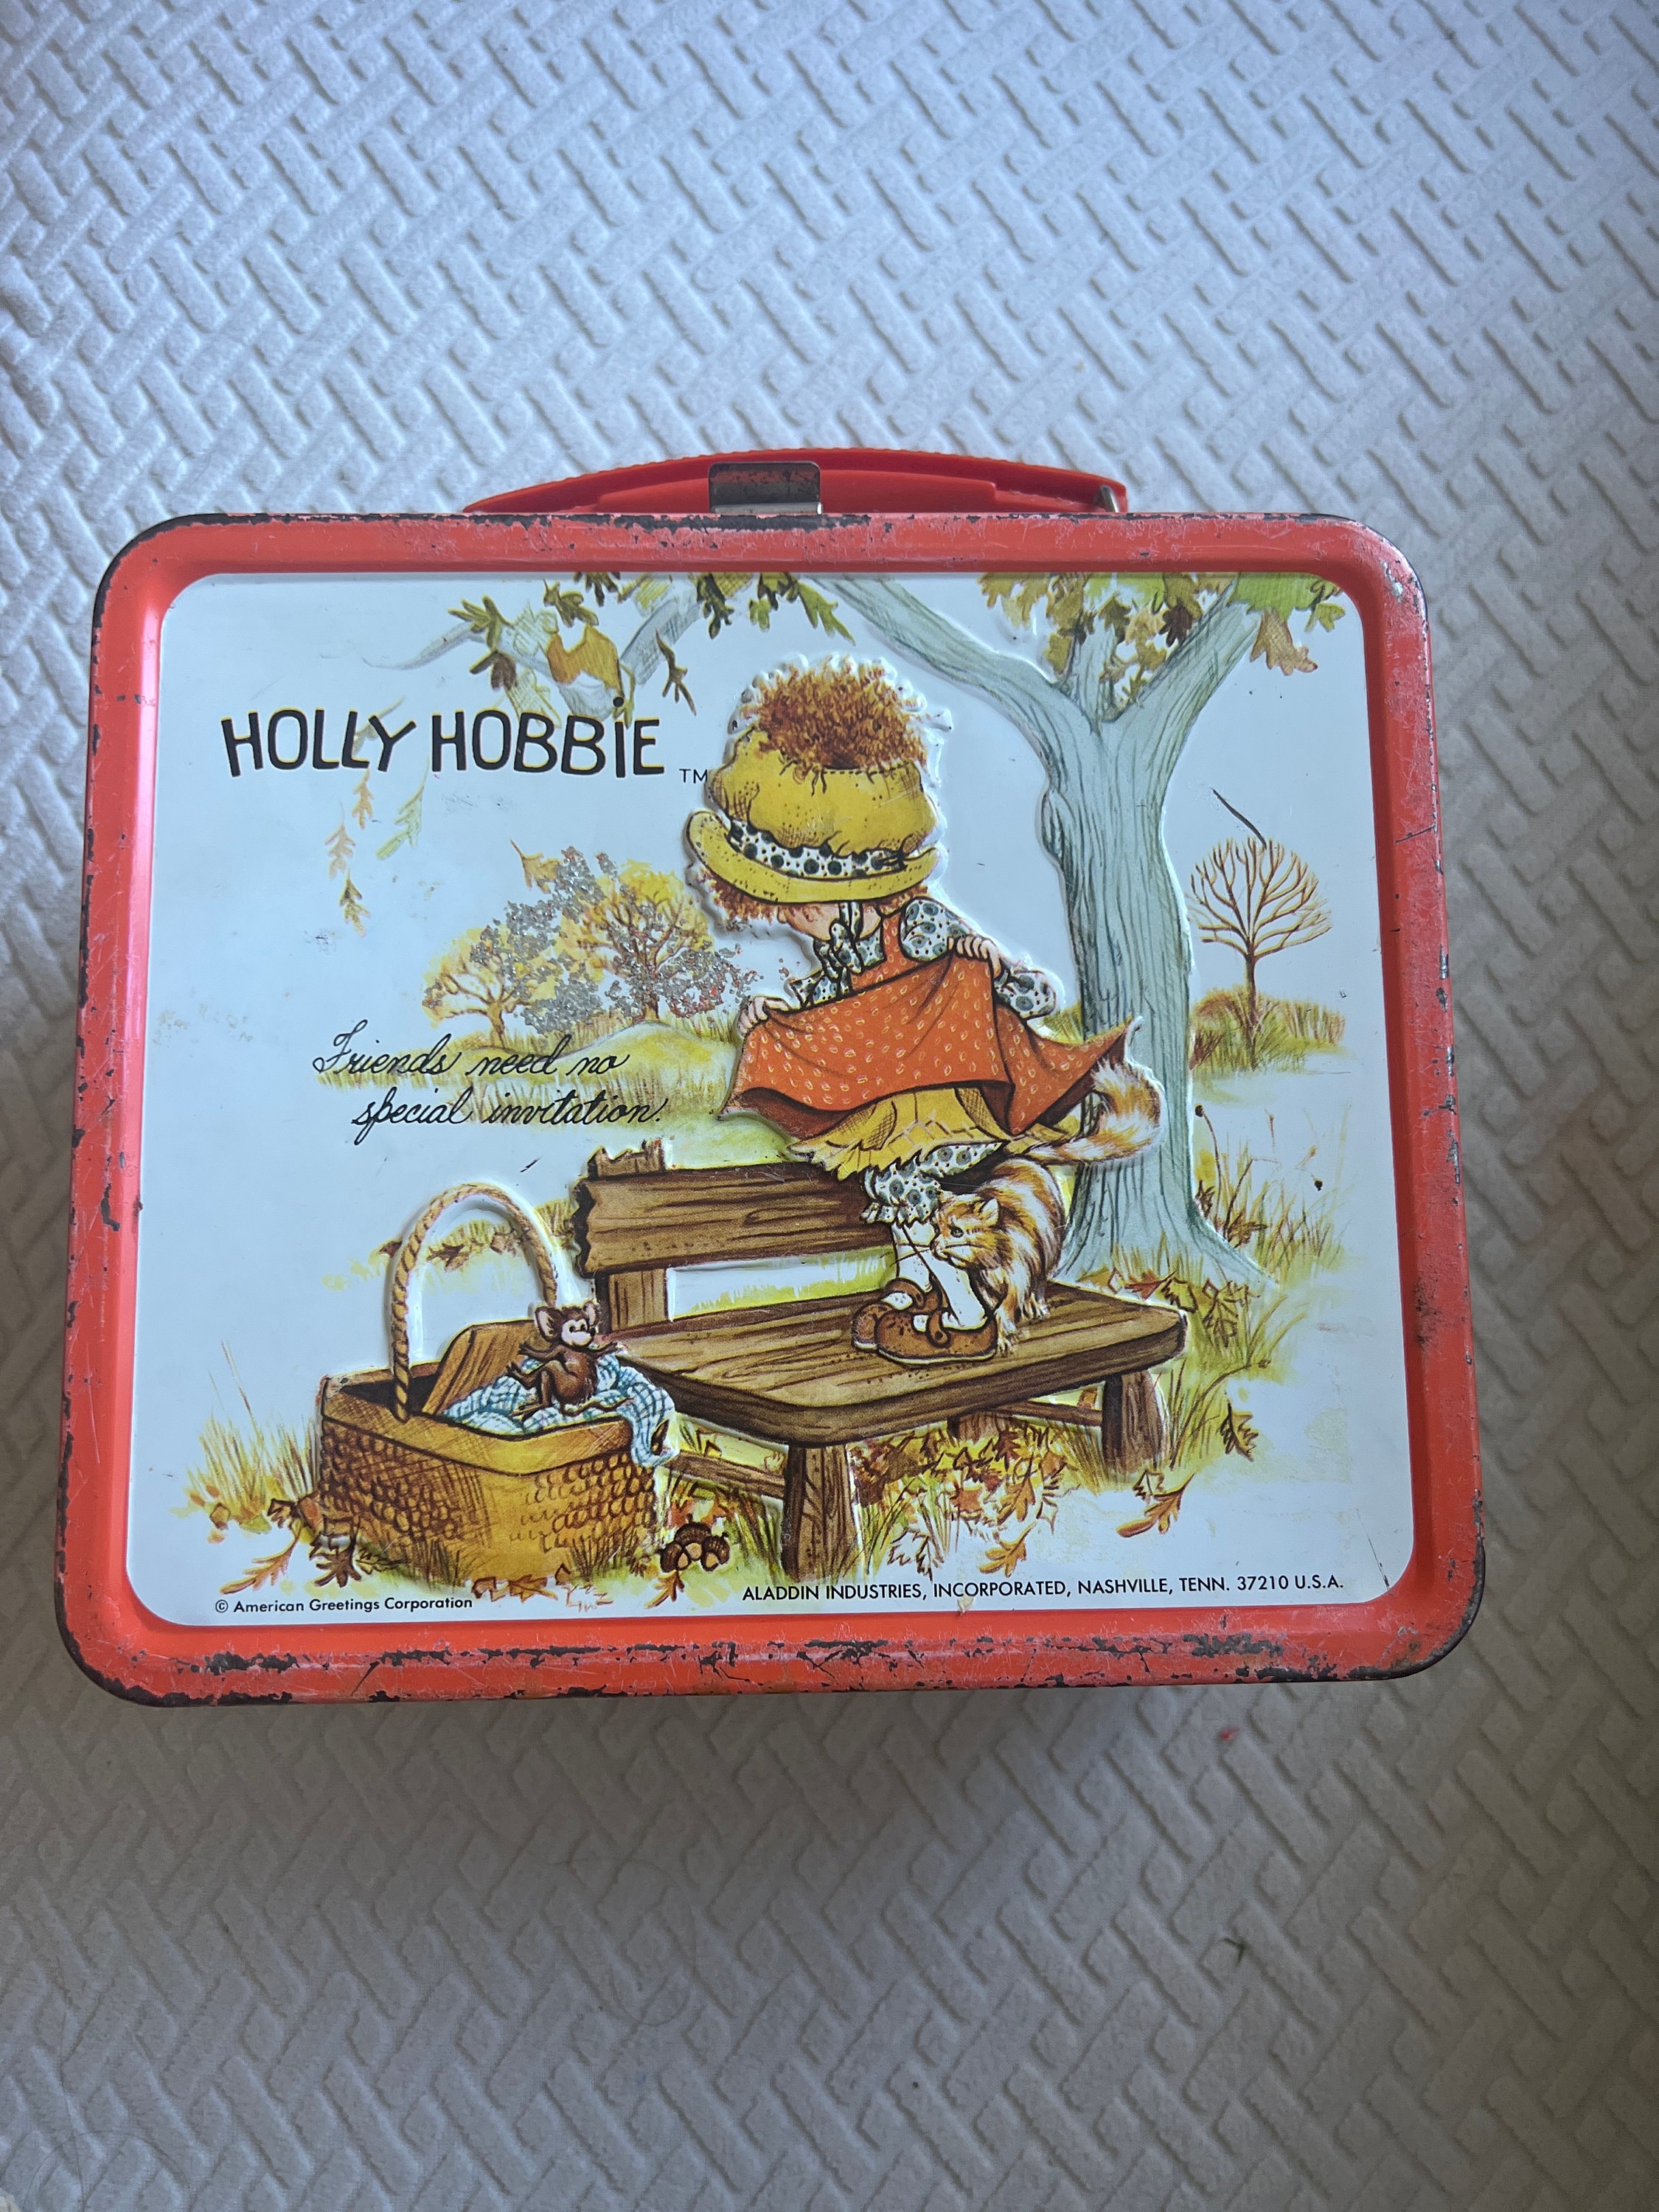 1975 Hallmark Cards Holly Hobbie Thermos Holds 8 Oz. of Liquid and